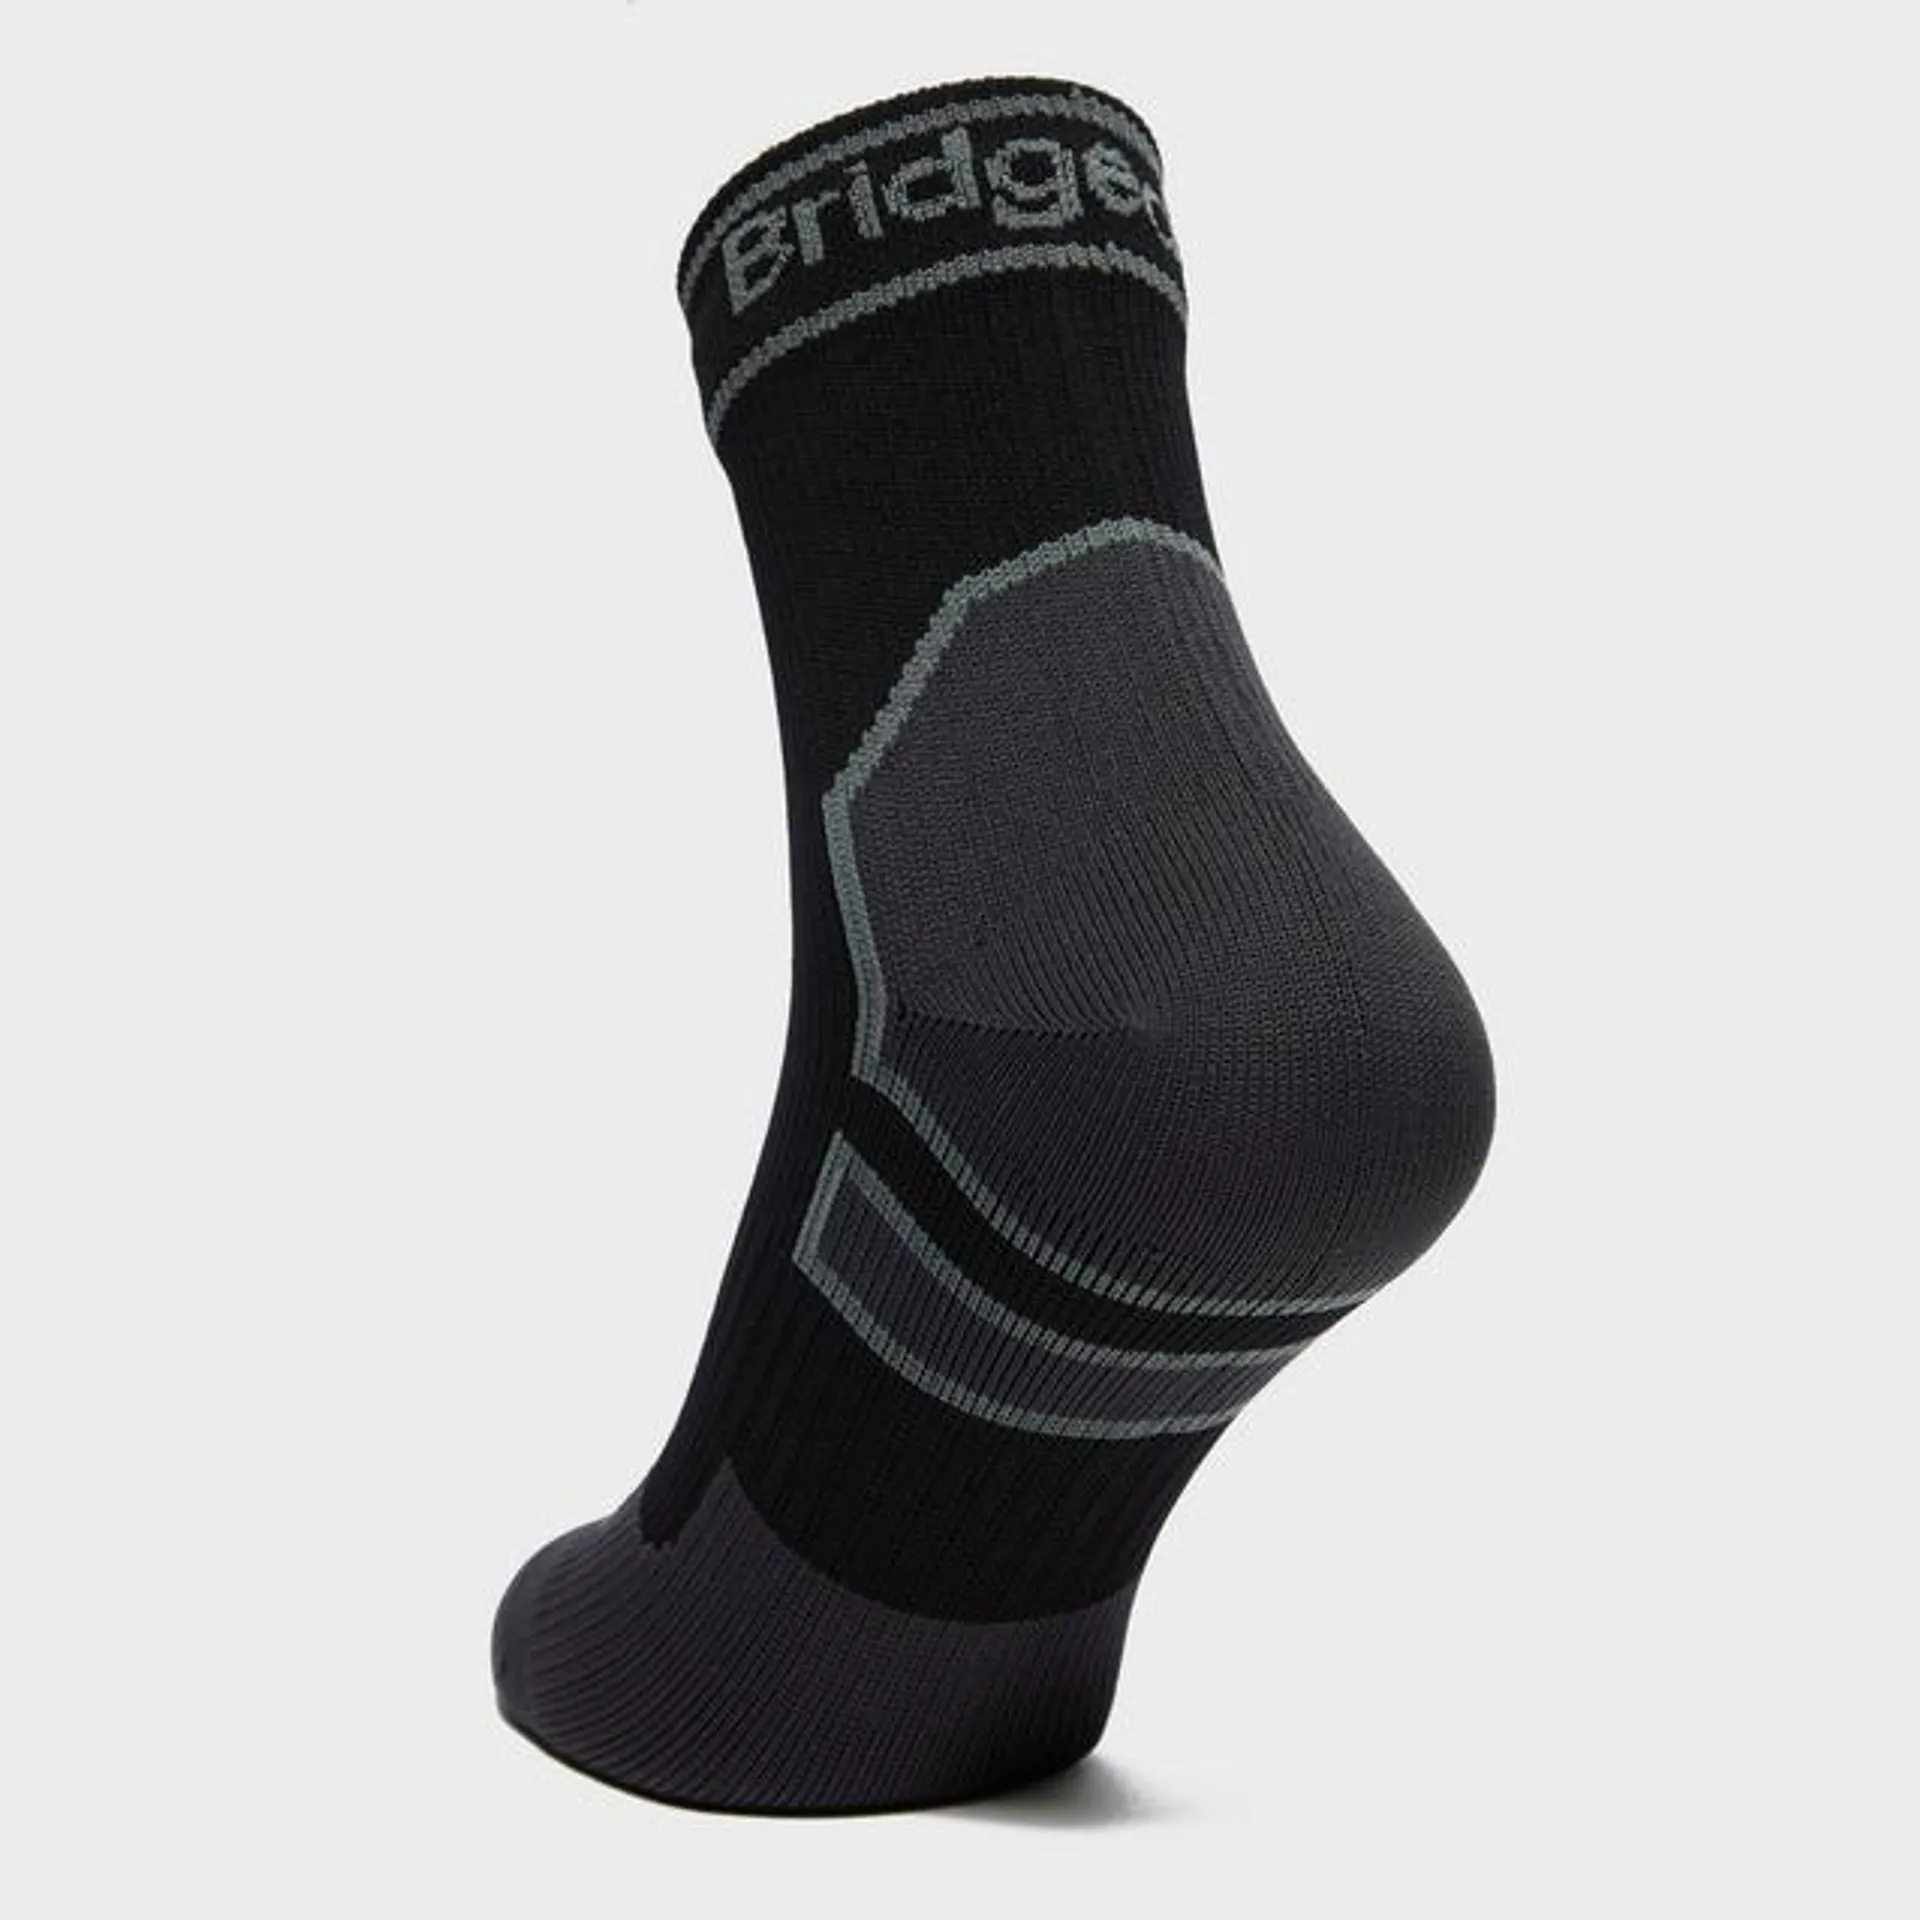 Men’s Stormsock Lightweight Ankle Sock